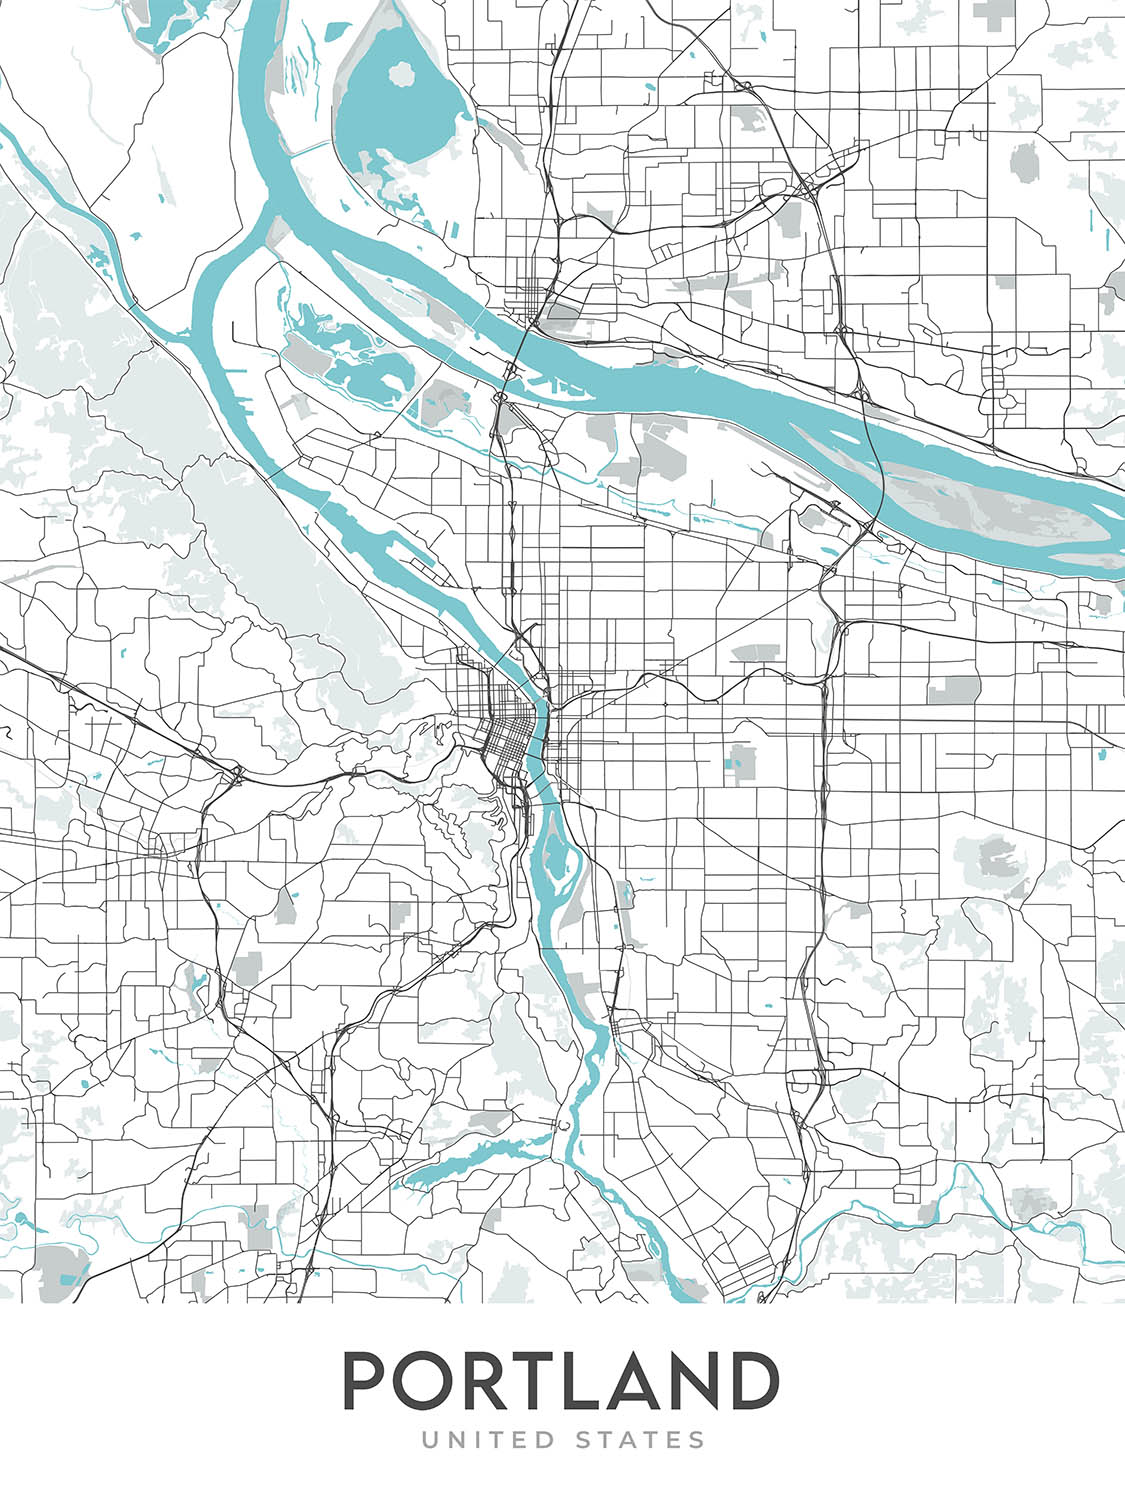 Moderner Stadtplan von Portland, OR: Innenstadt, Pearl District, Willamette River, Mt. Hood, I-5